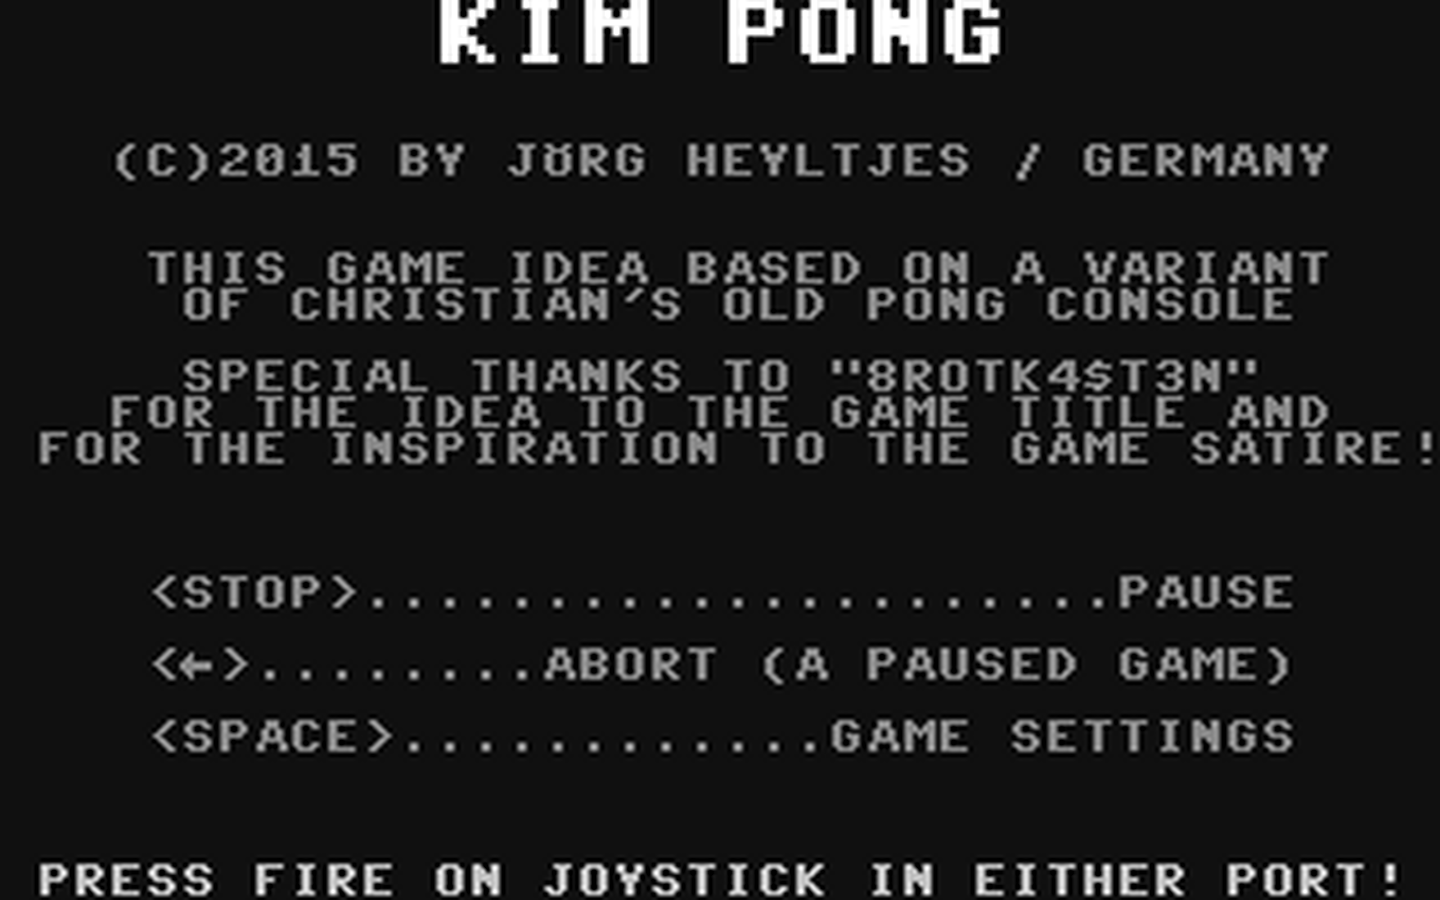 C64 GameBase Kim_Pong (Public_Domain) 2015